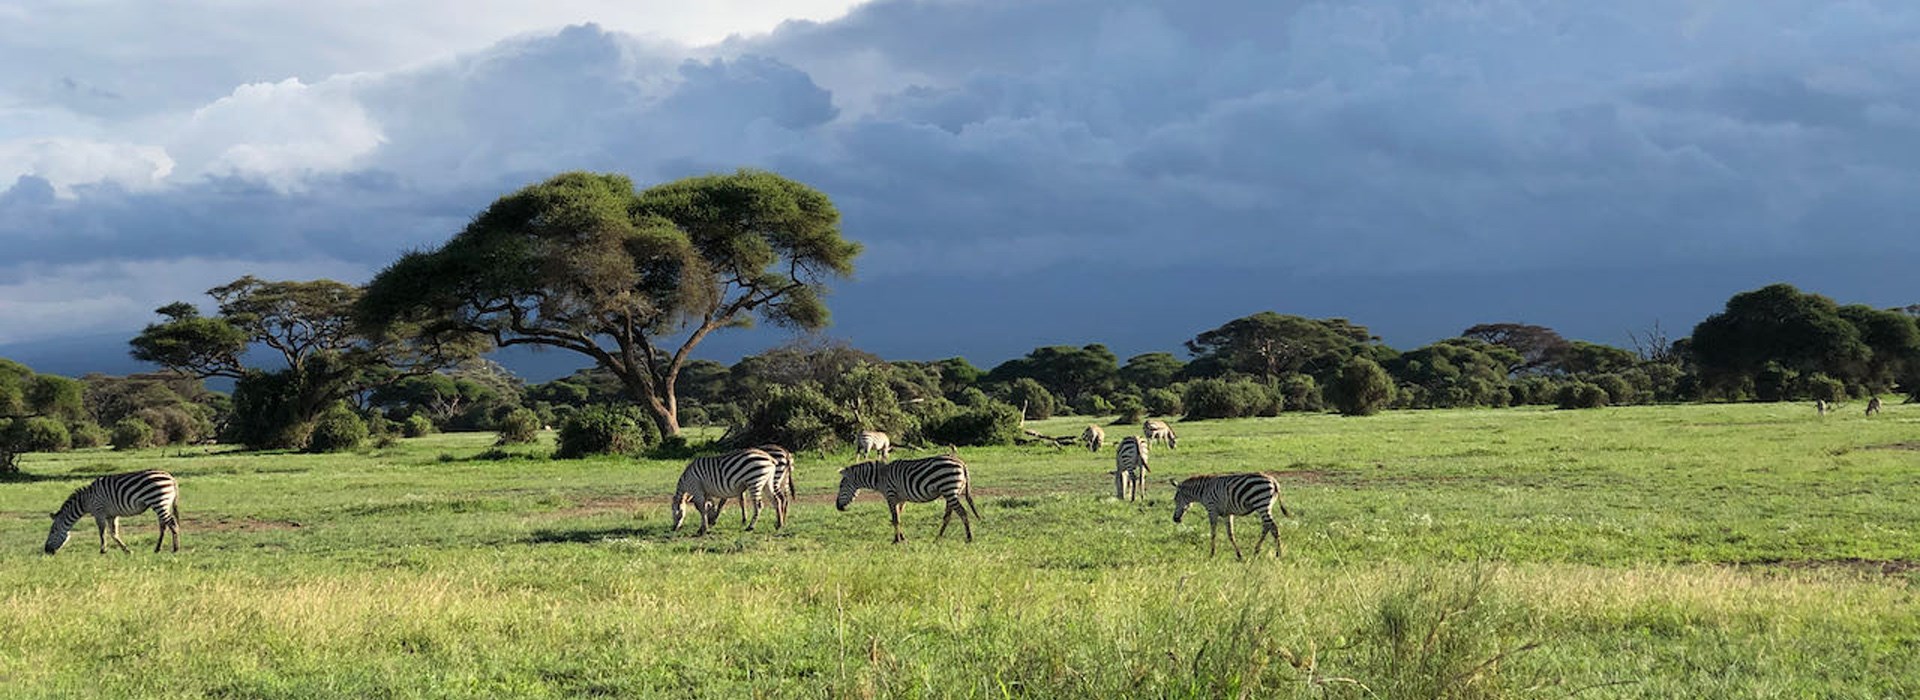 Visiter Le parc national d'Amboseli  - Kenya